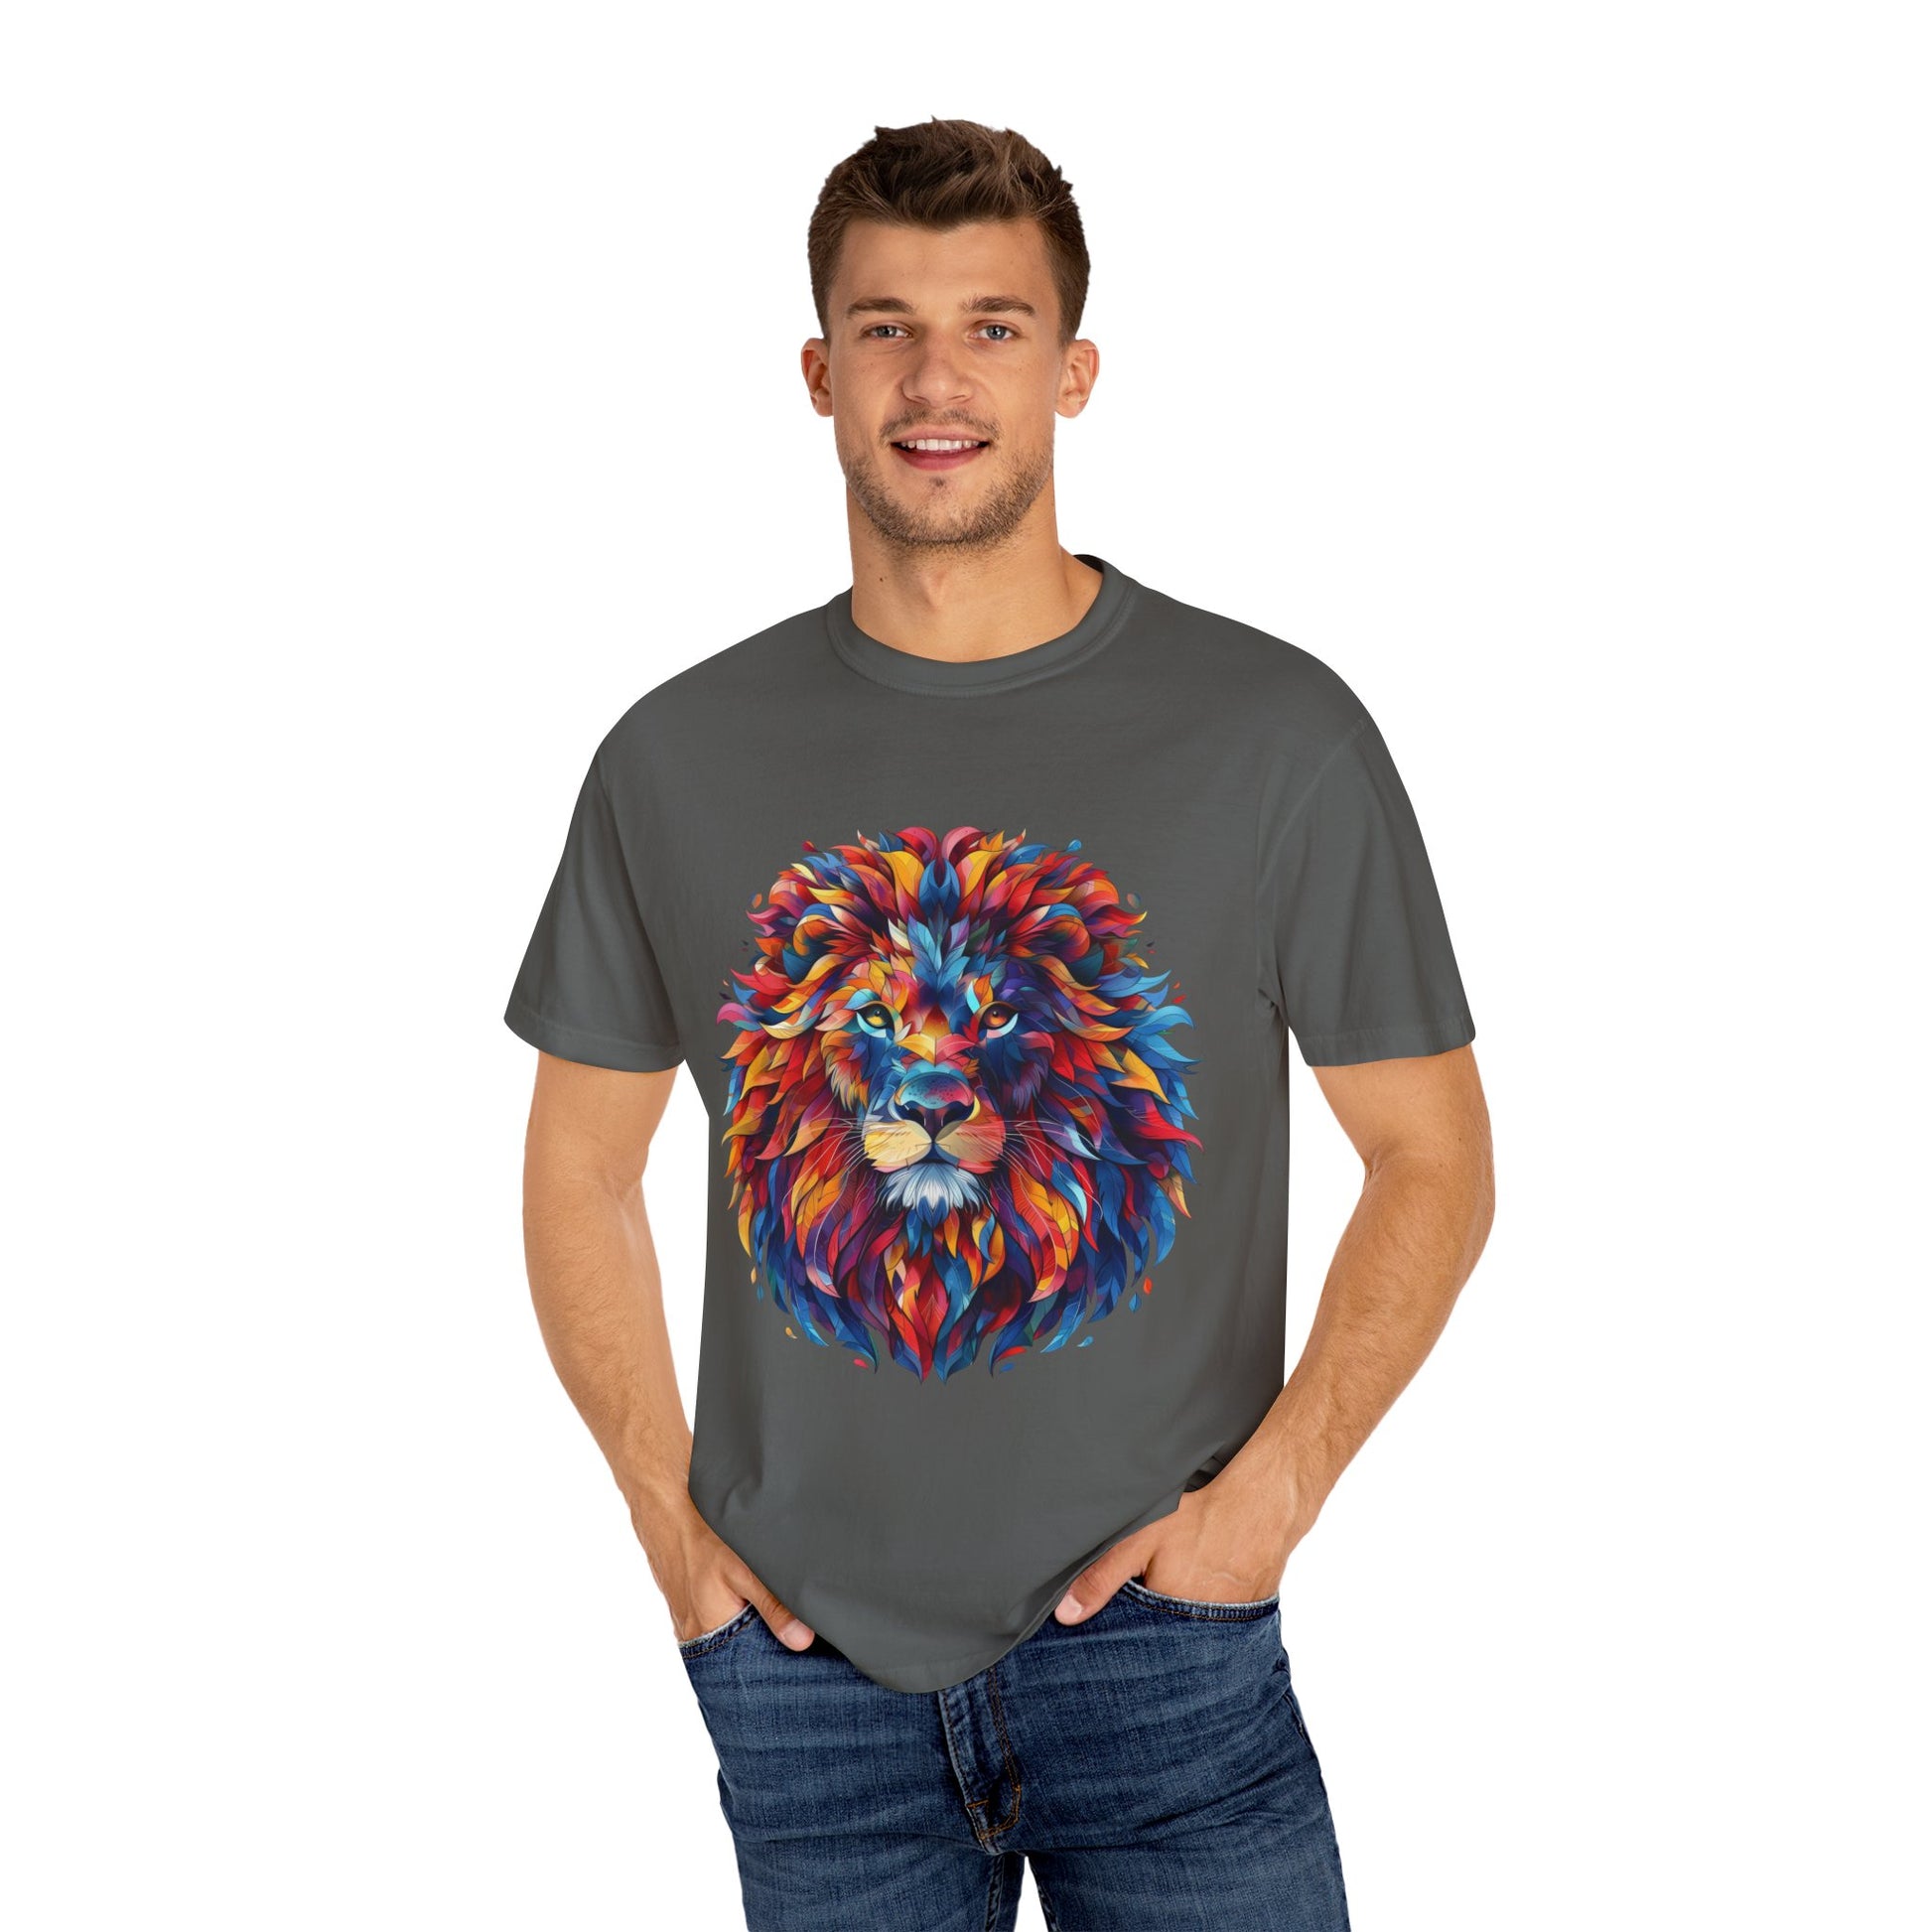 Lion Head Cool Graphic Design Novelty Unisex Garment-dyed T-shirt Cotton Funny Humorous Graphic Soft Premium Unisex Men Women Pepper T-shirt Birthday Gift-51